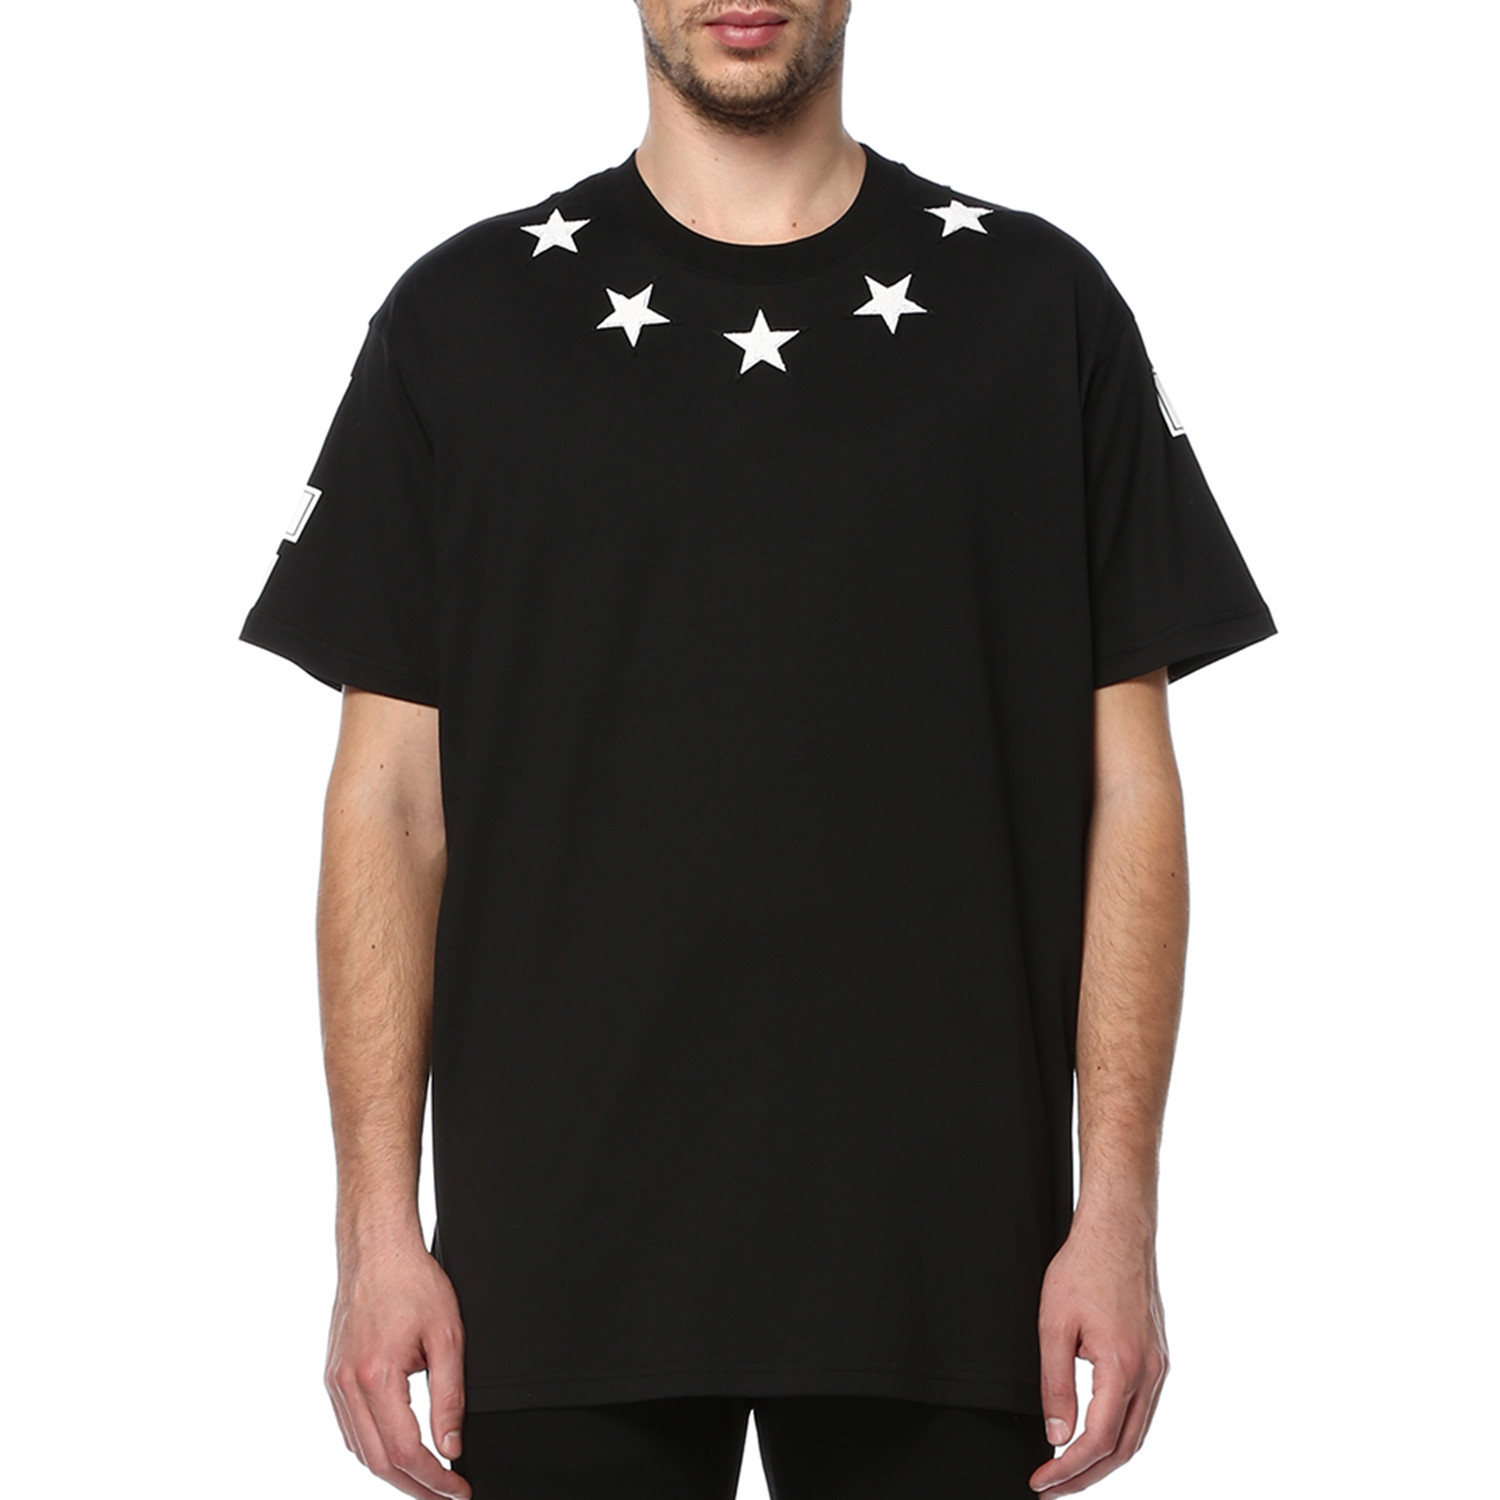 givenchy black star t shirt